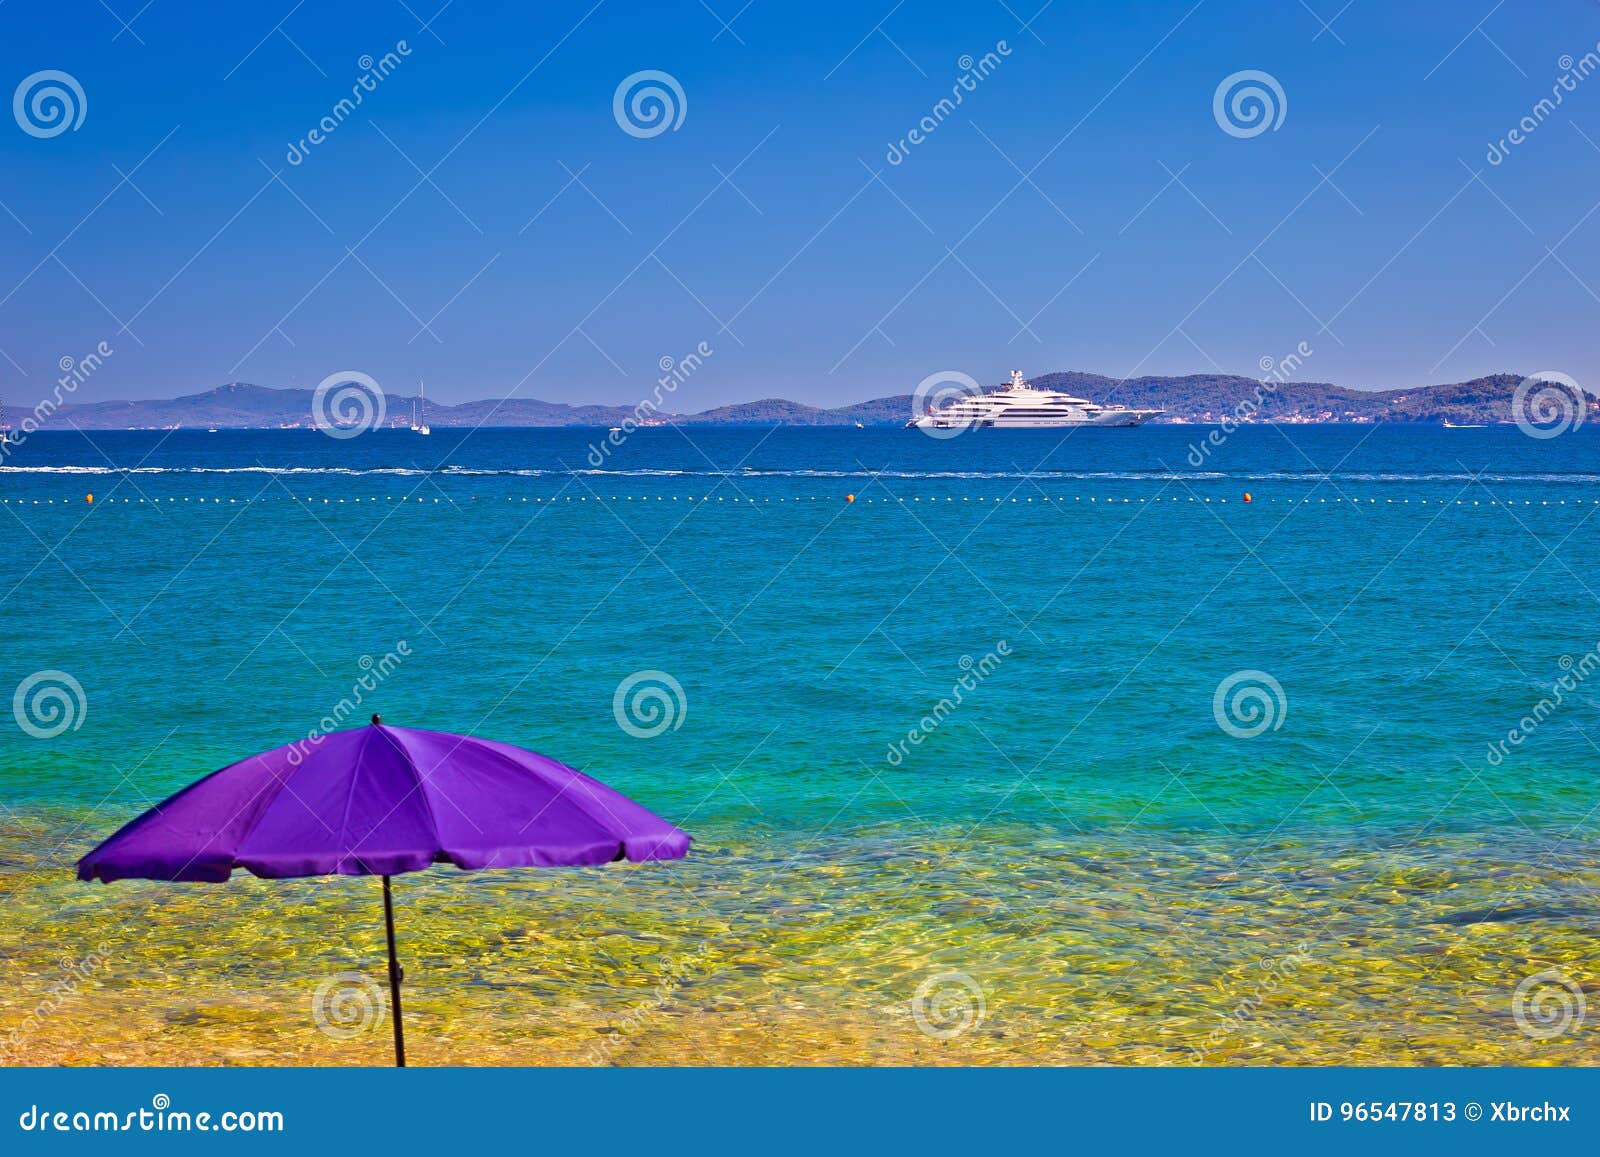 adriatic beach in zadar with megayacht background